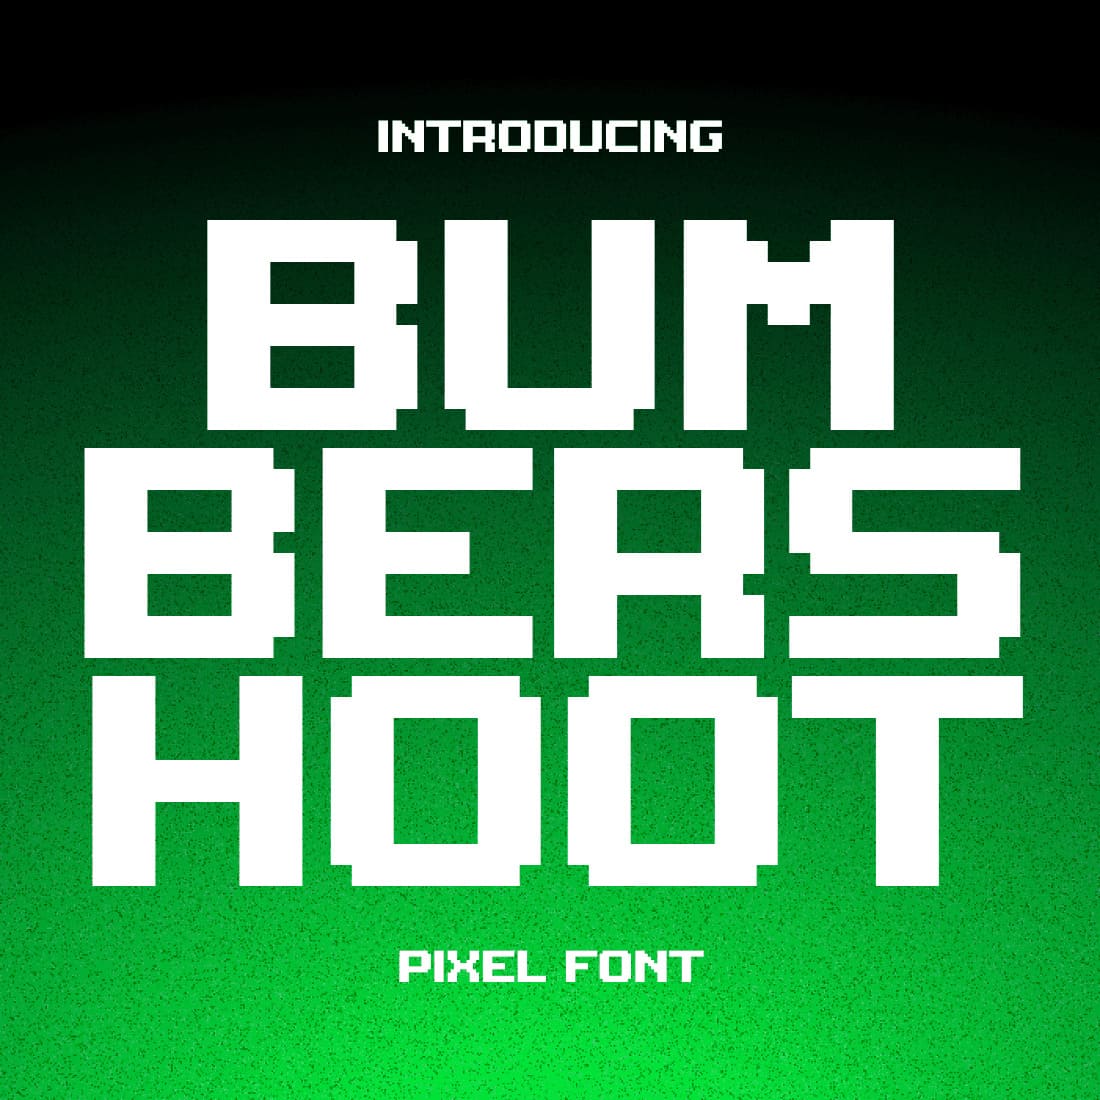 Bumbershoot pixel font main cover by MasterBundles.